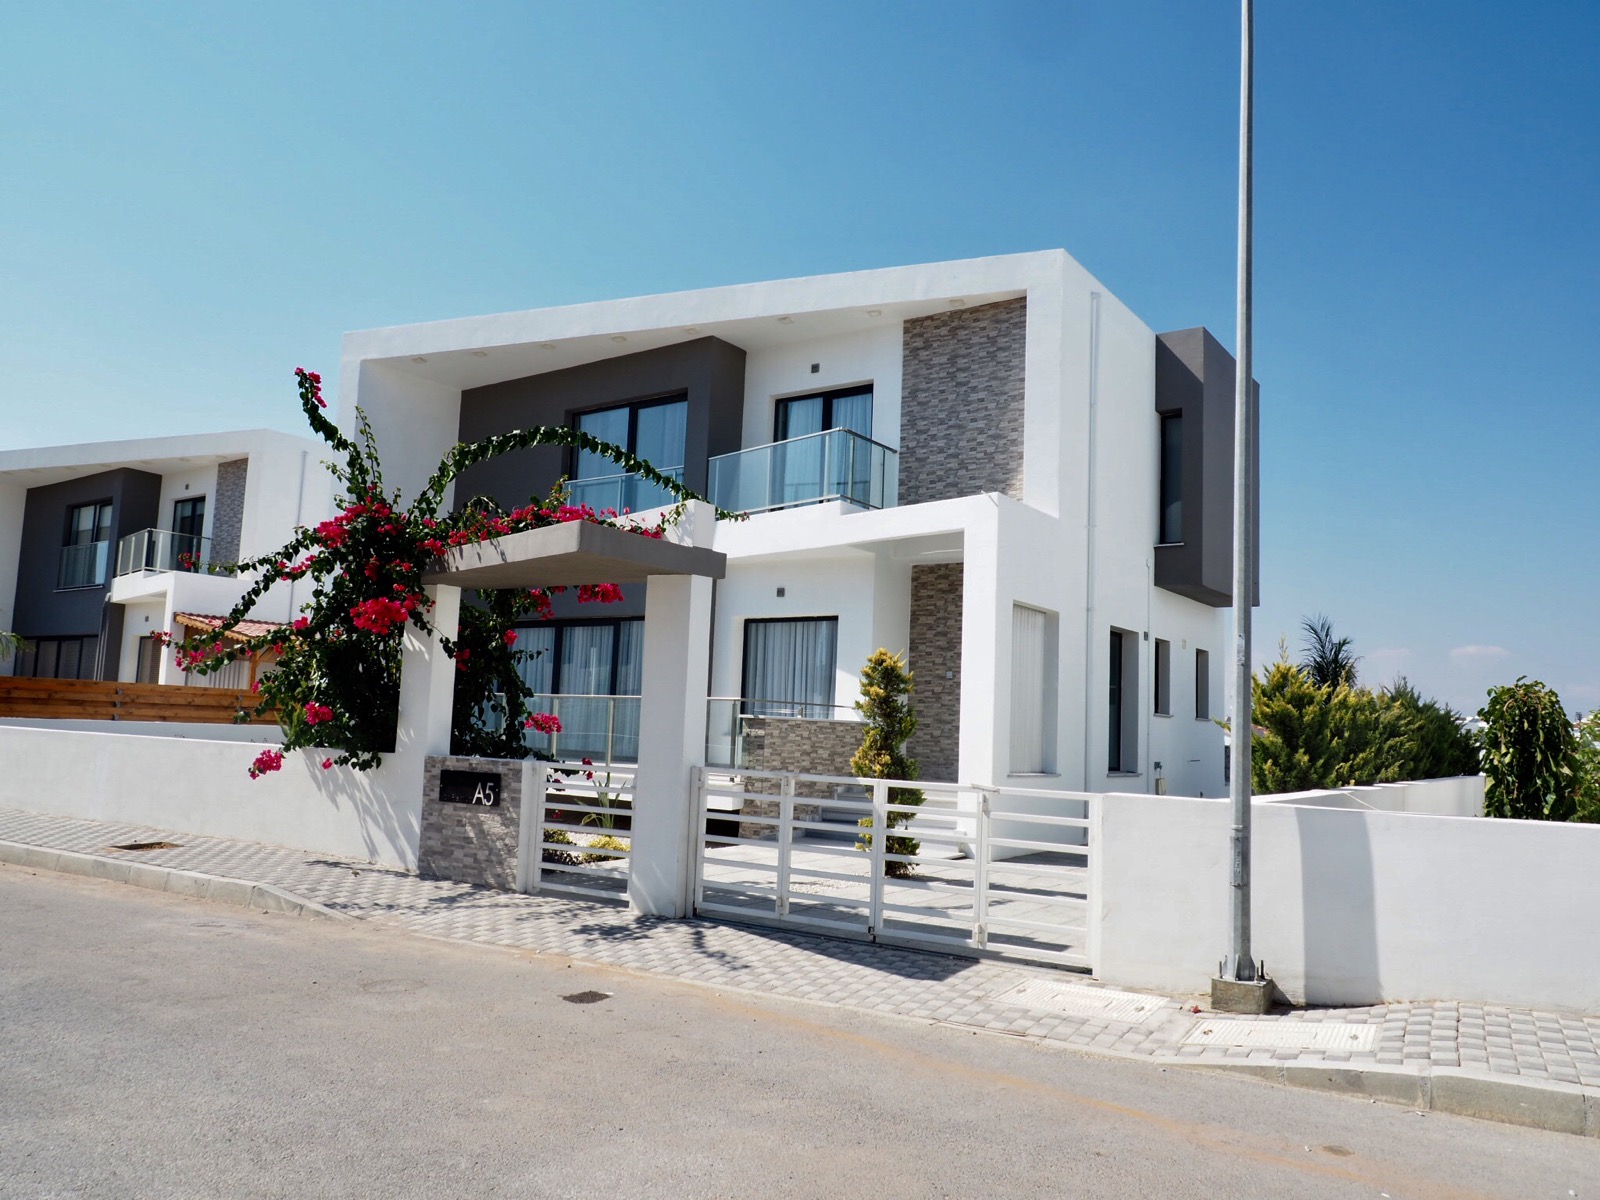 مشروع سكني استثماري في قبرص كود (IC 90)